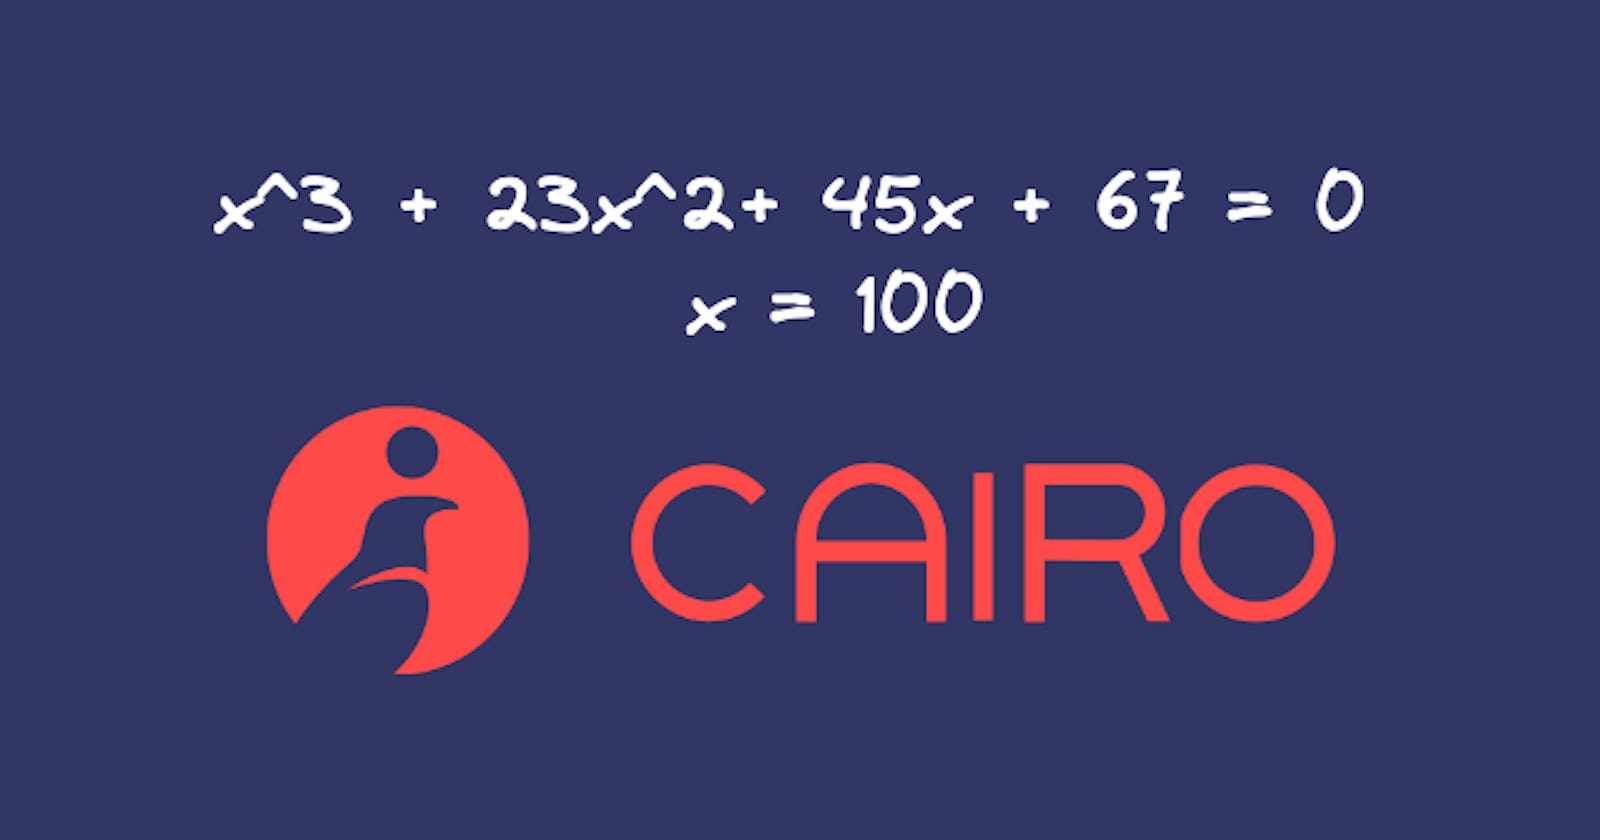 Cairo exercise: Polynomial Equation